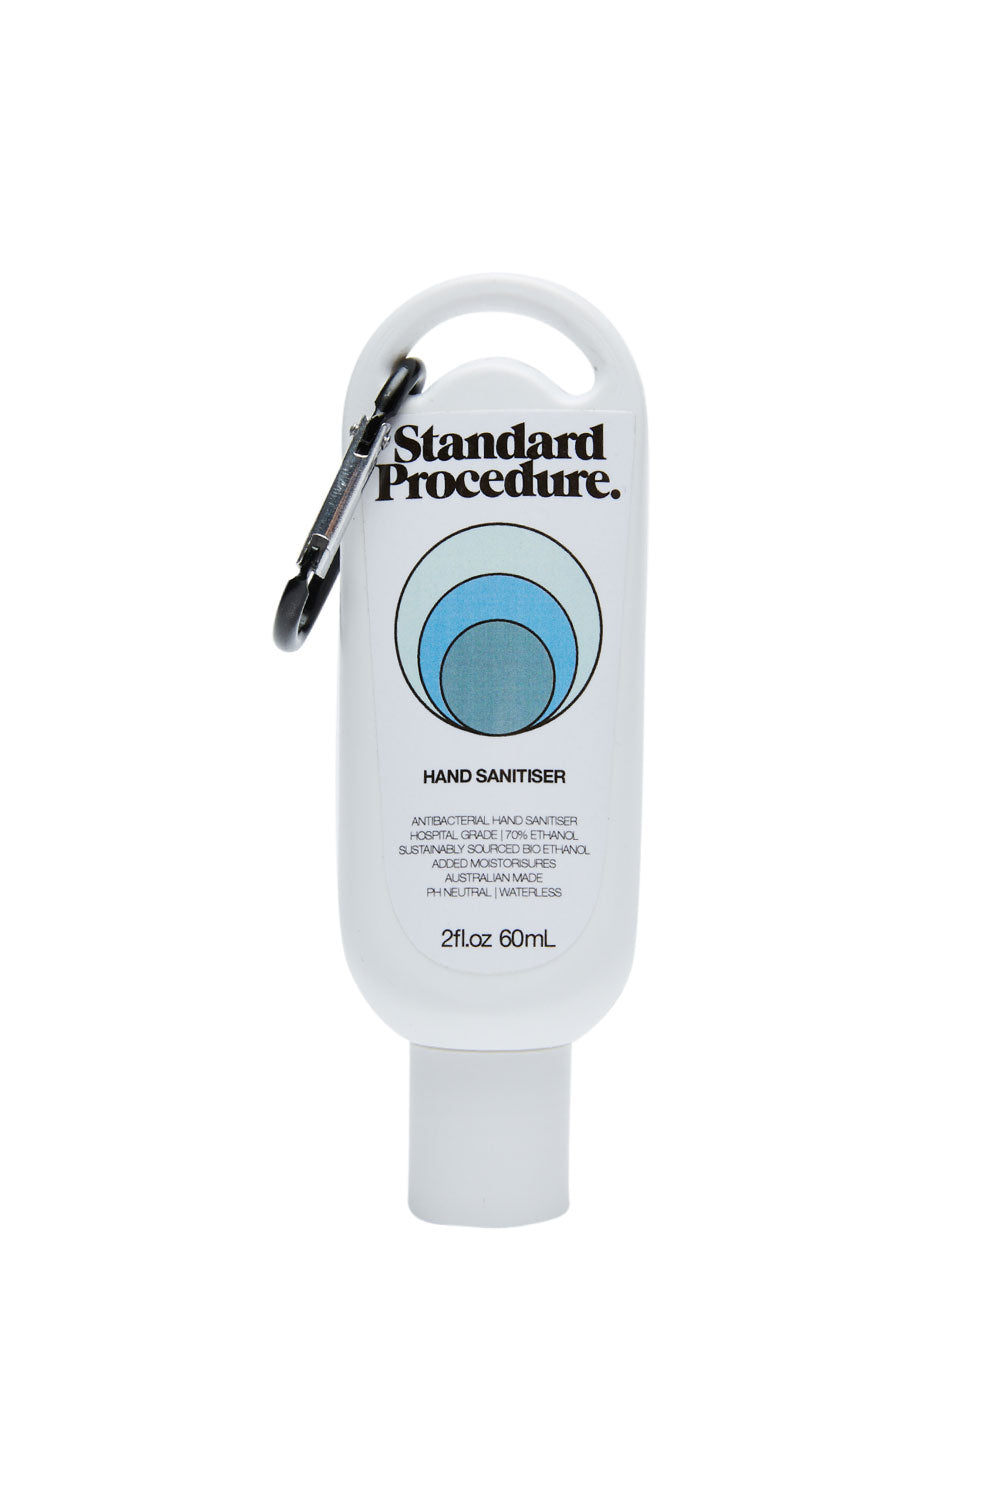 Standard Procedure Hand Sanitiser 60ml Clip On